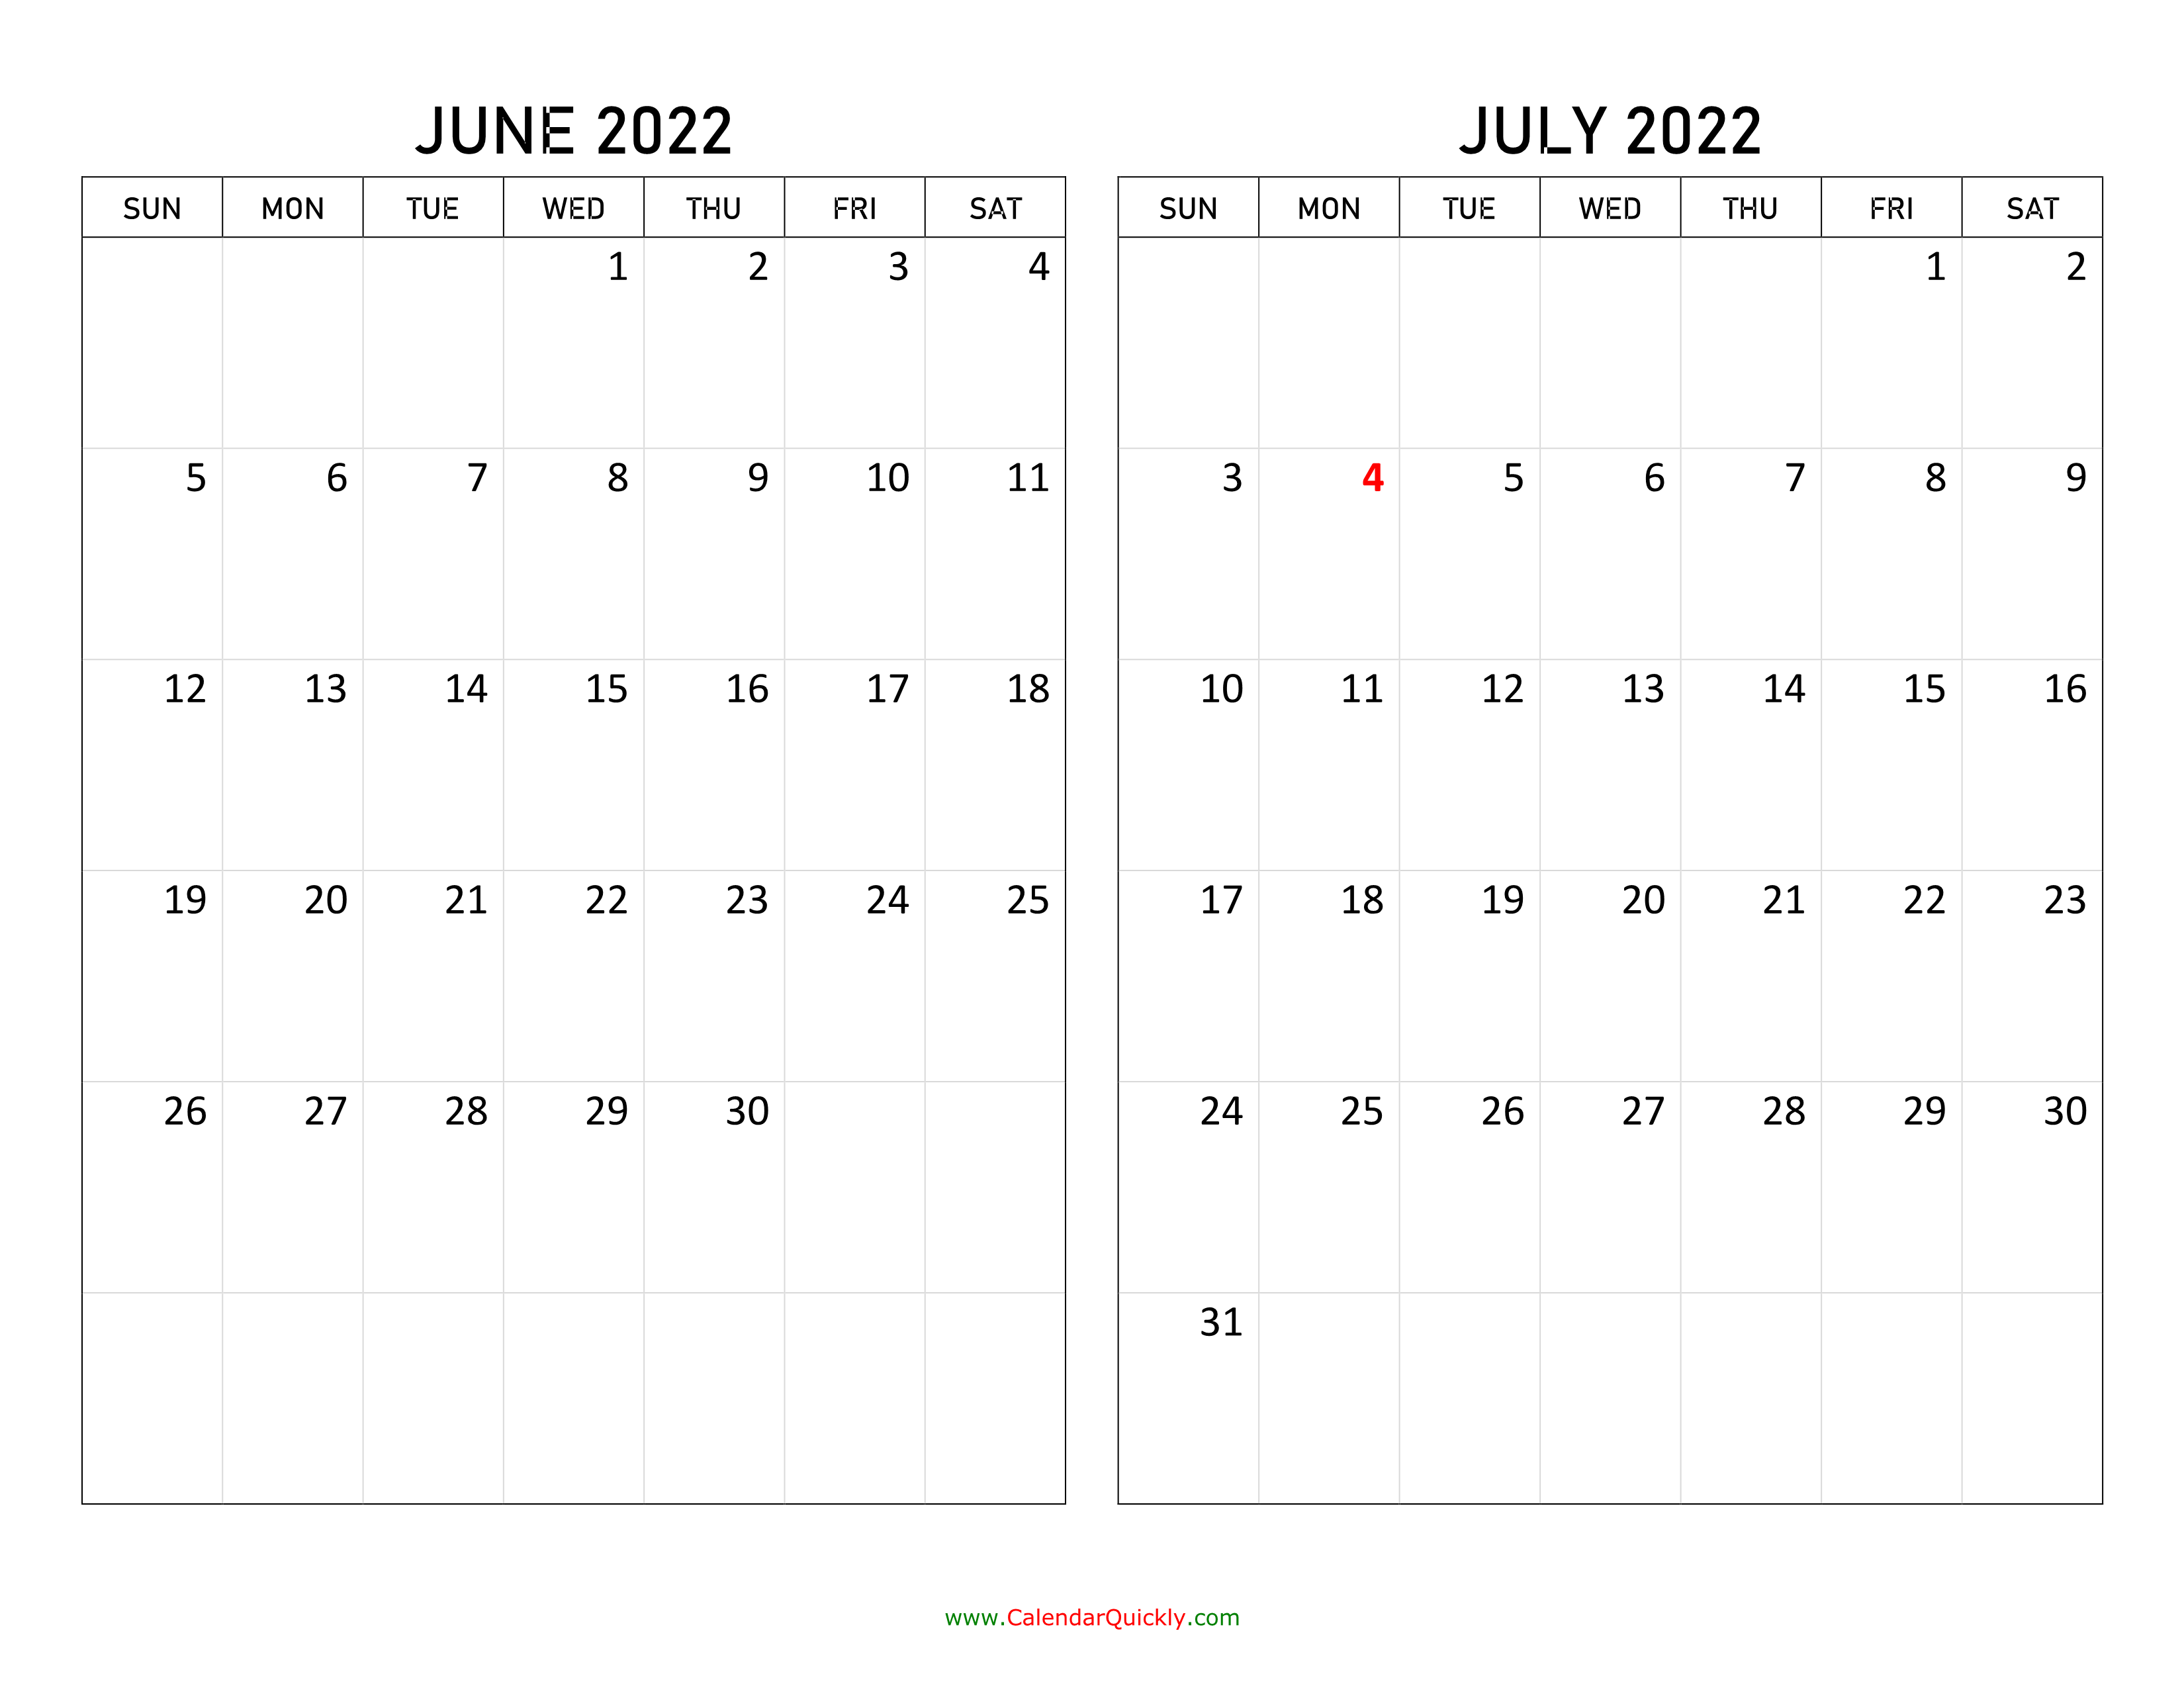 June and July 2022 Calendar Calendar Quickly